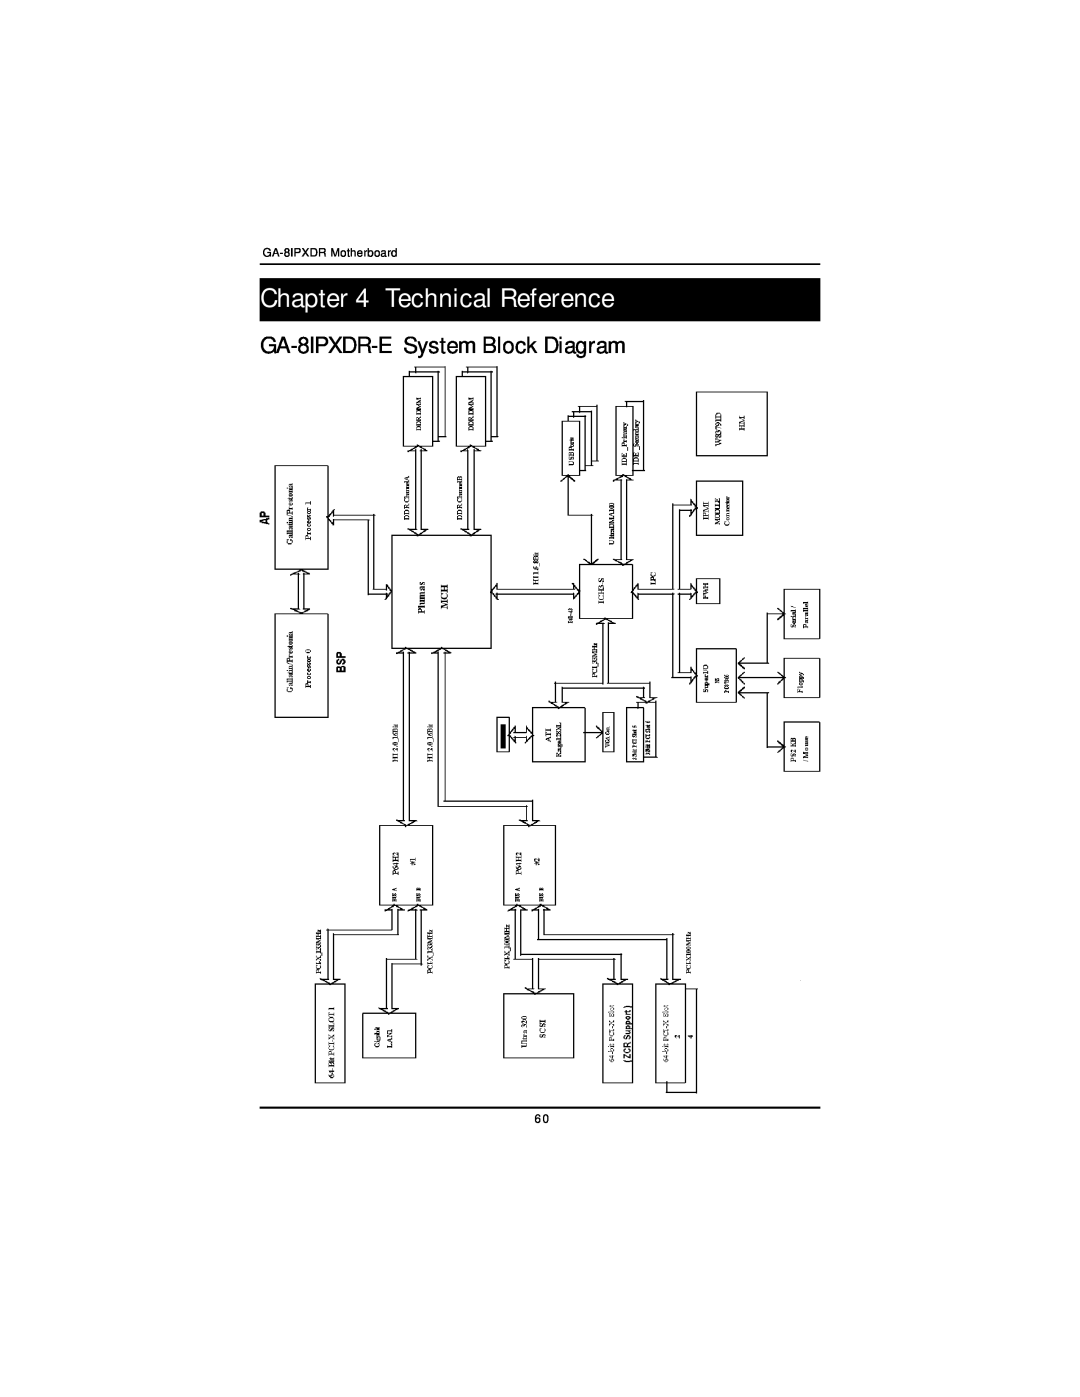 Intel user manual Technical Reference, GA-8IPXDR-E System Block Diagram 